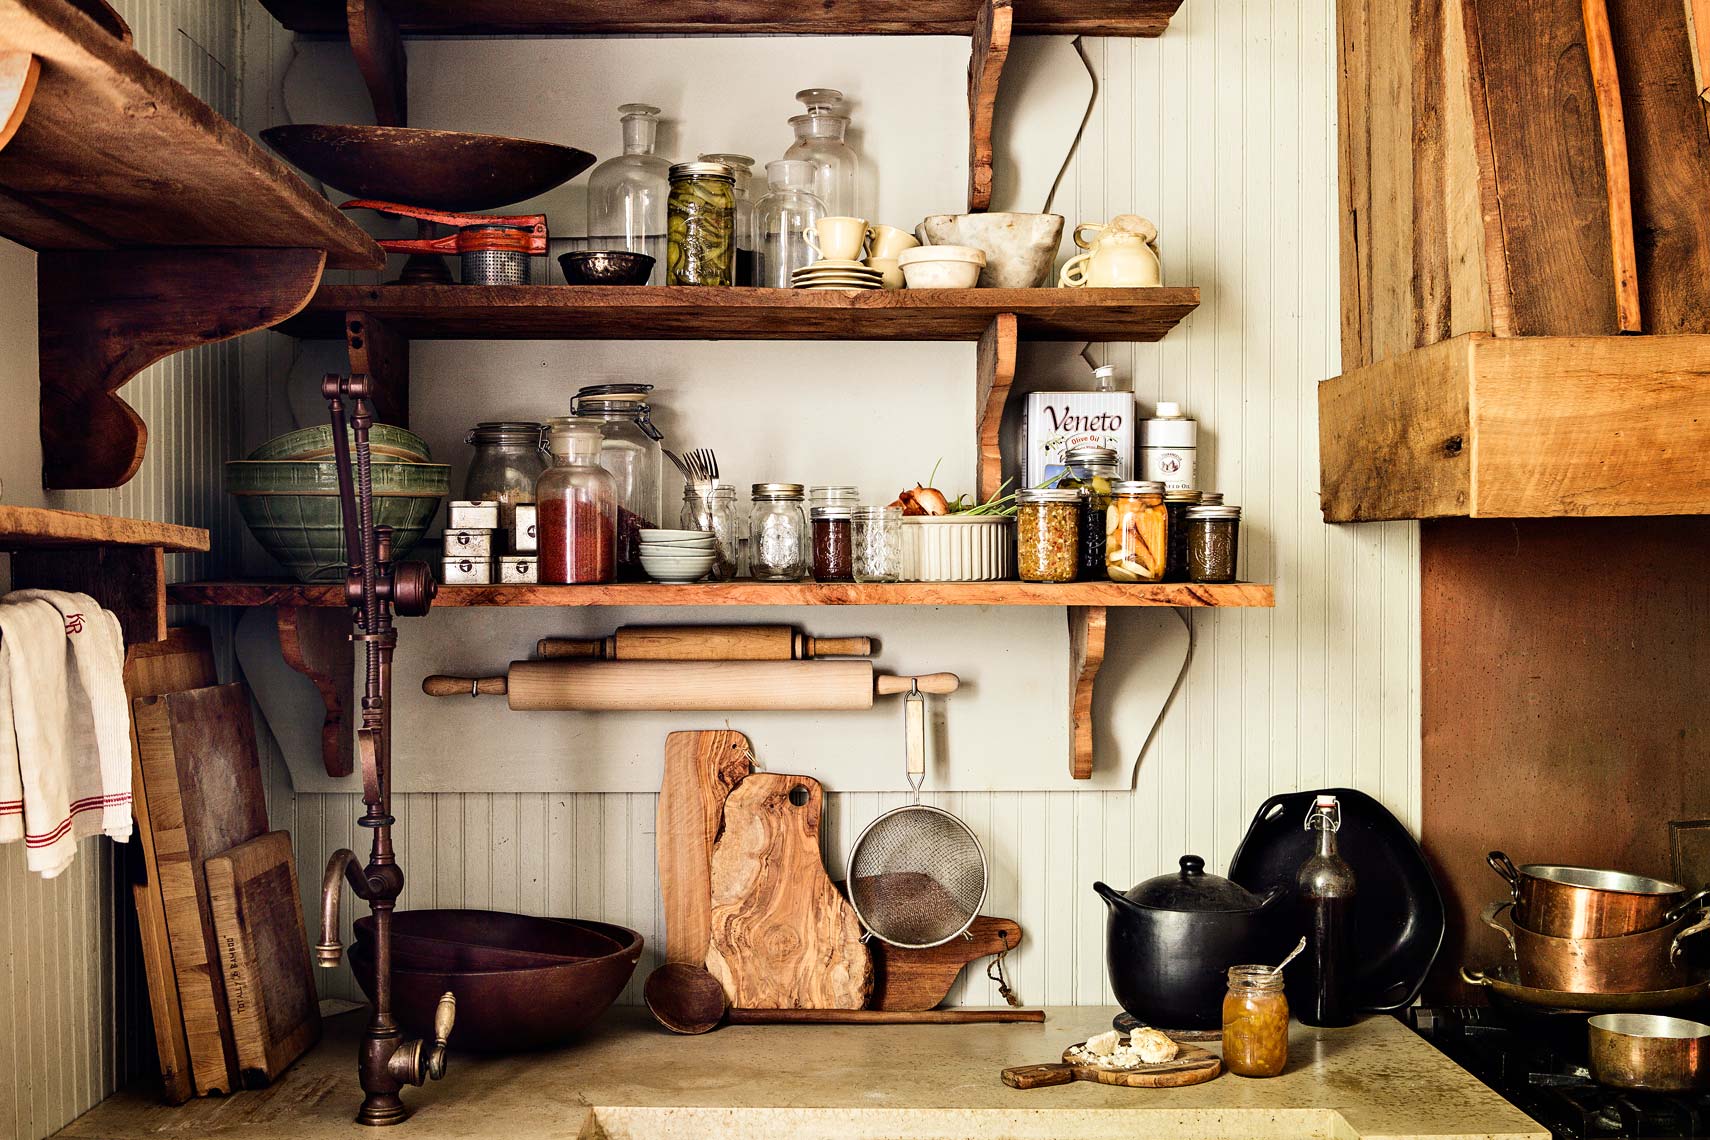 Photograph showing interior design  of rustic kitchen, Atlanta